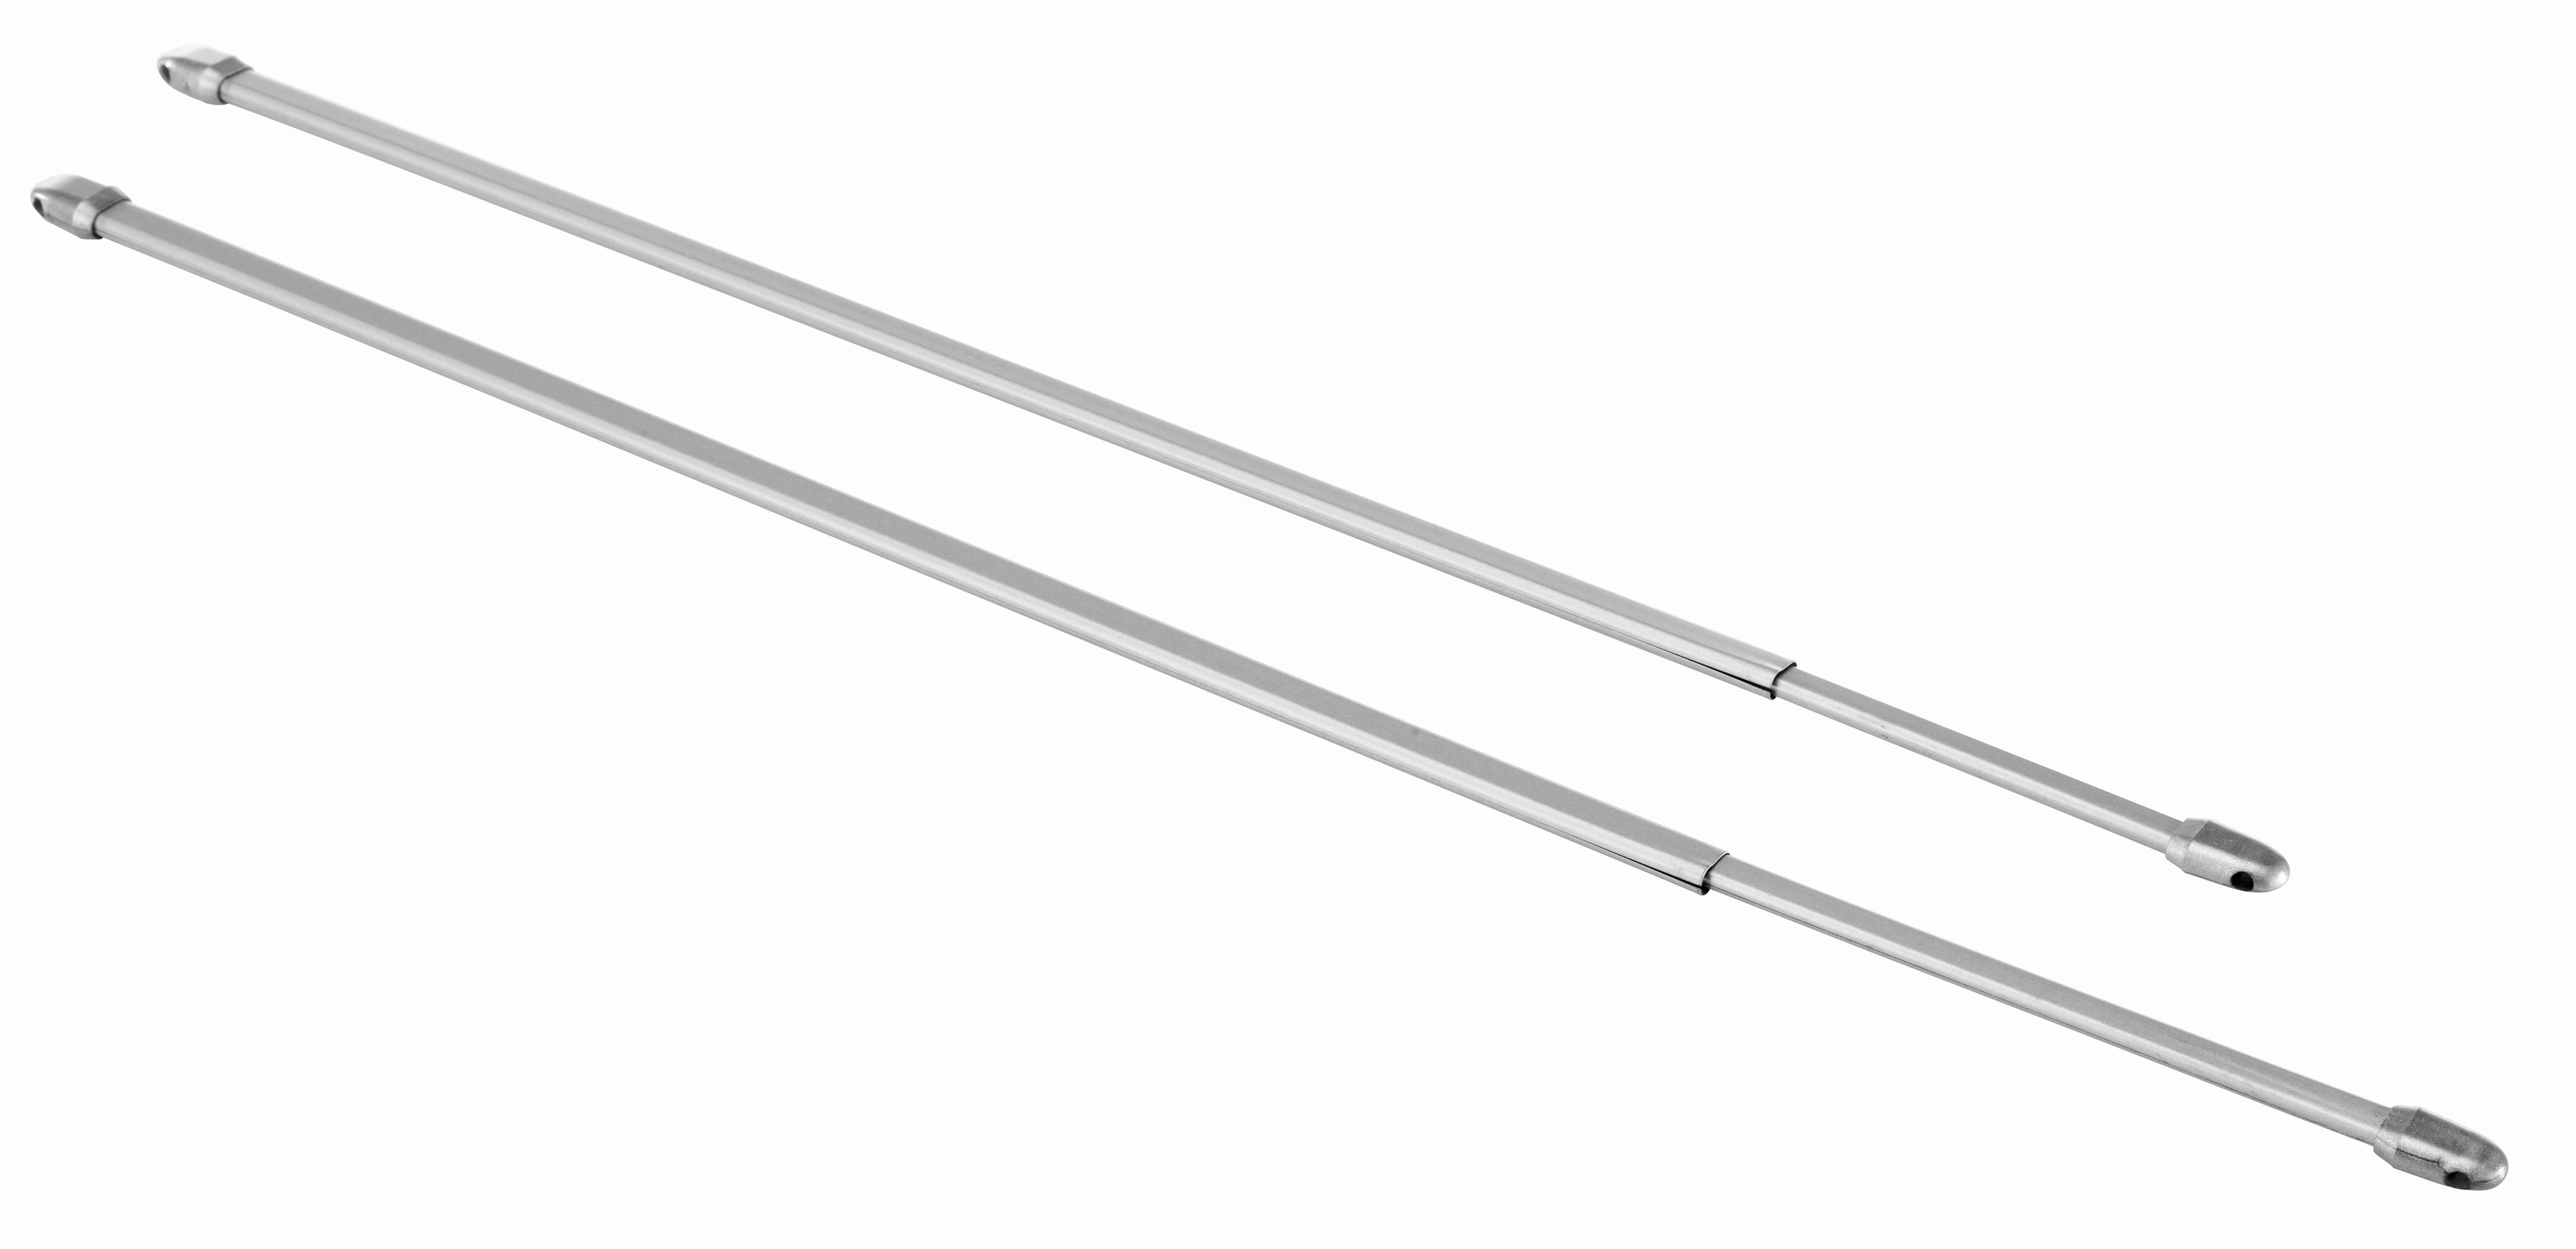 Vitragenstange Simple in Silber ca. 60-90cm, 2 Stk. - Silberfarben, Metall (60-90cmcm) - Modern Living